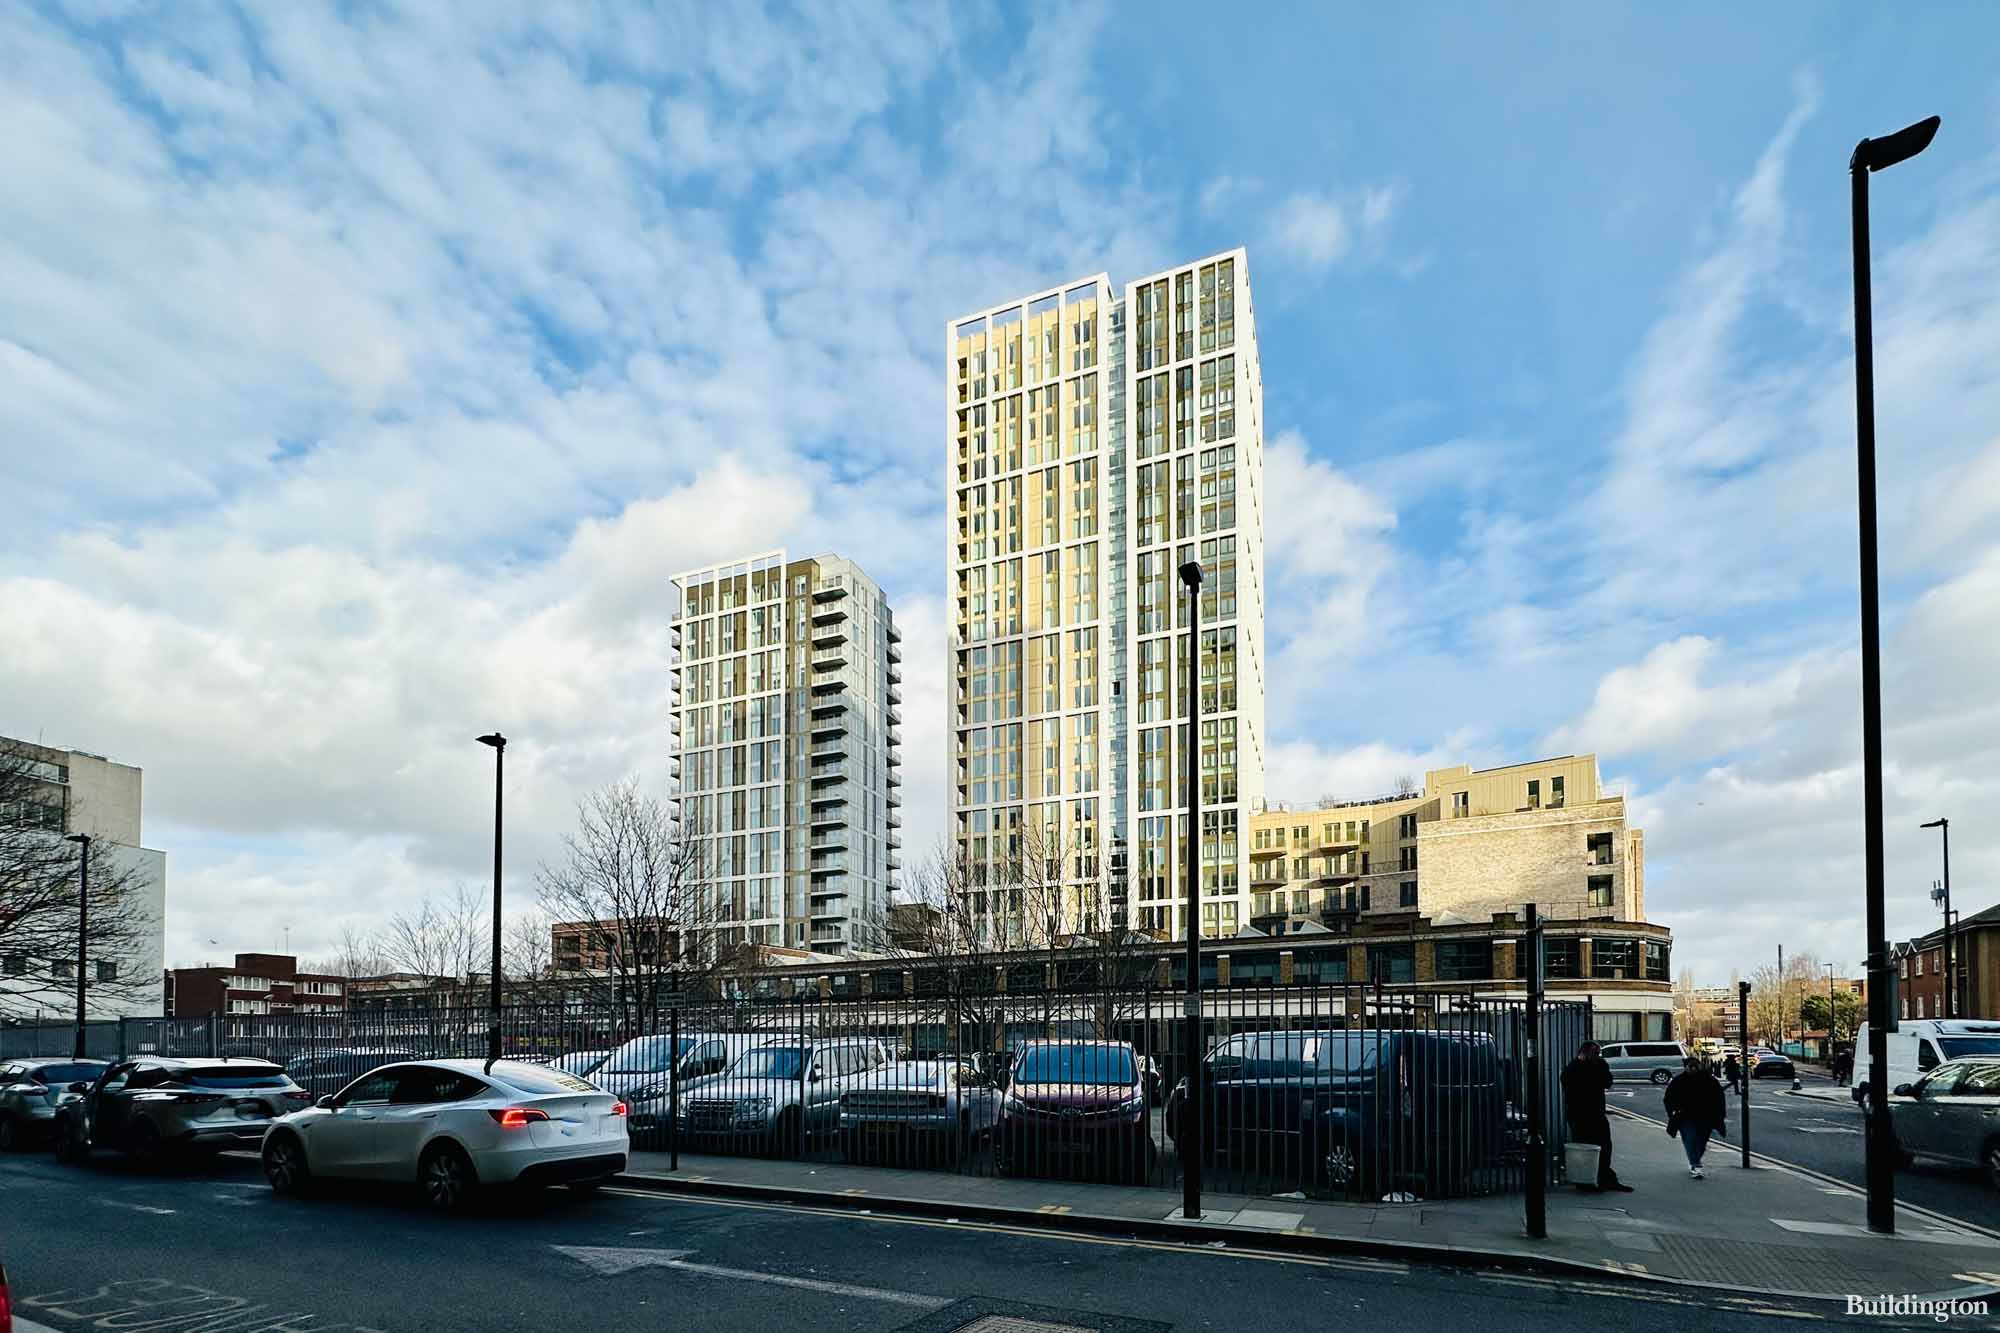 The Silk District development in Whitechapel, London E1.